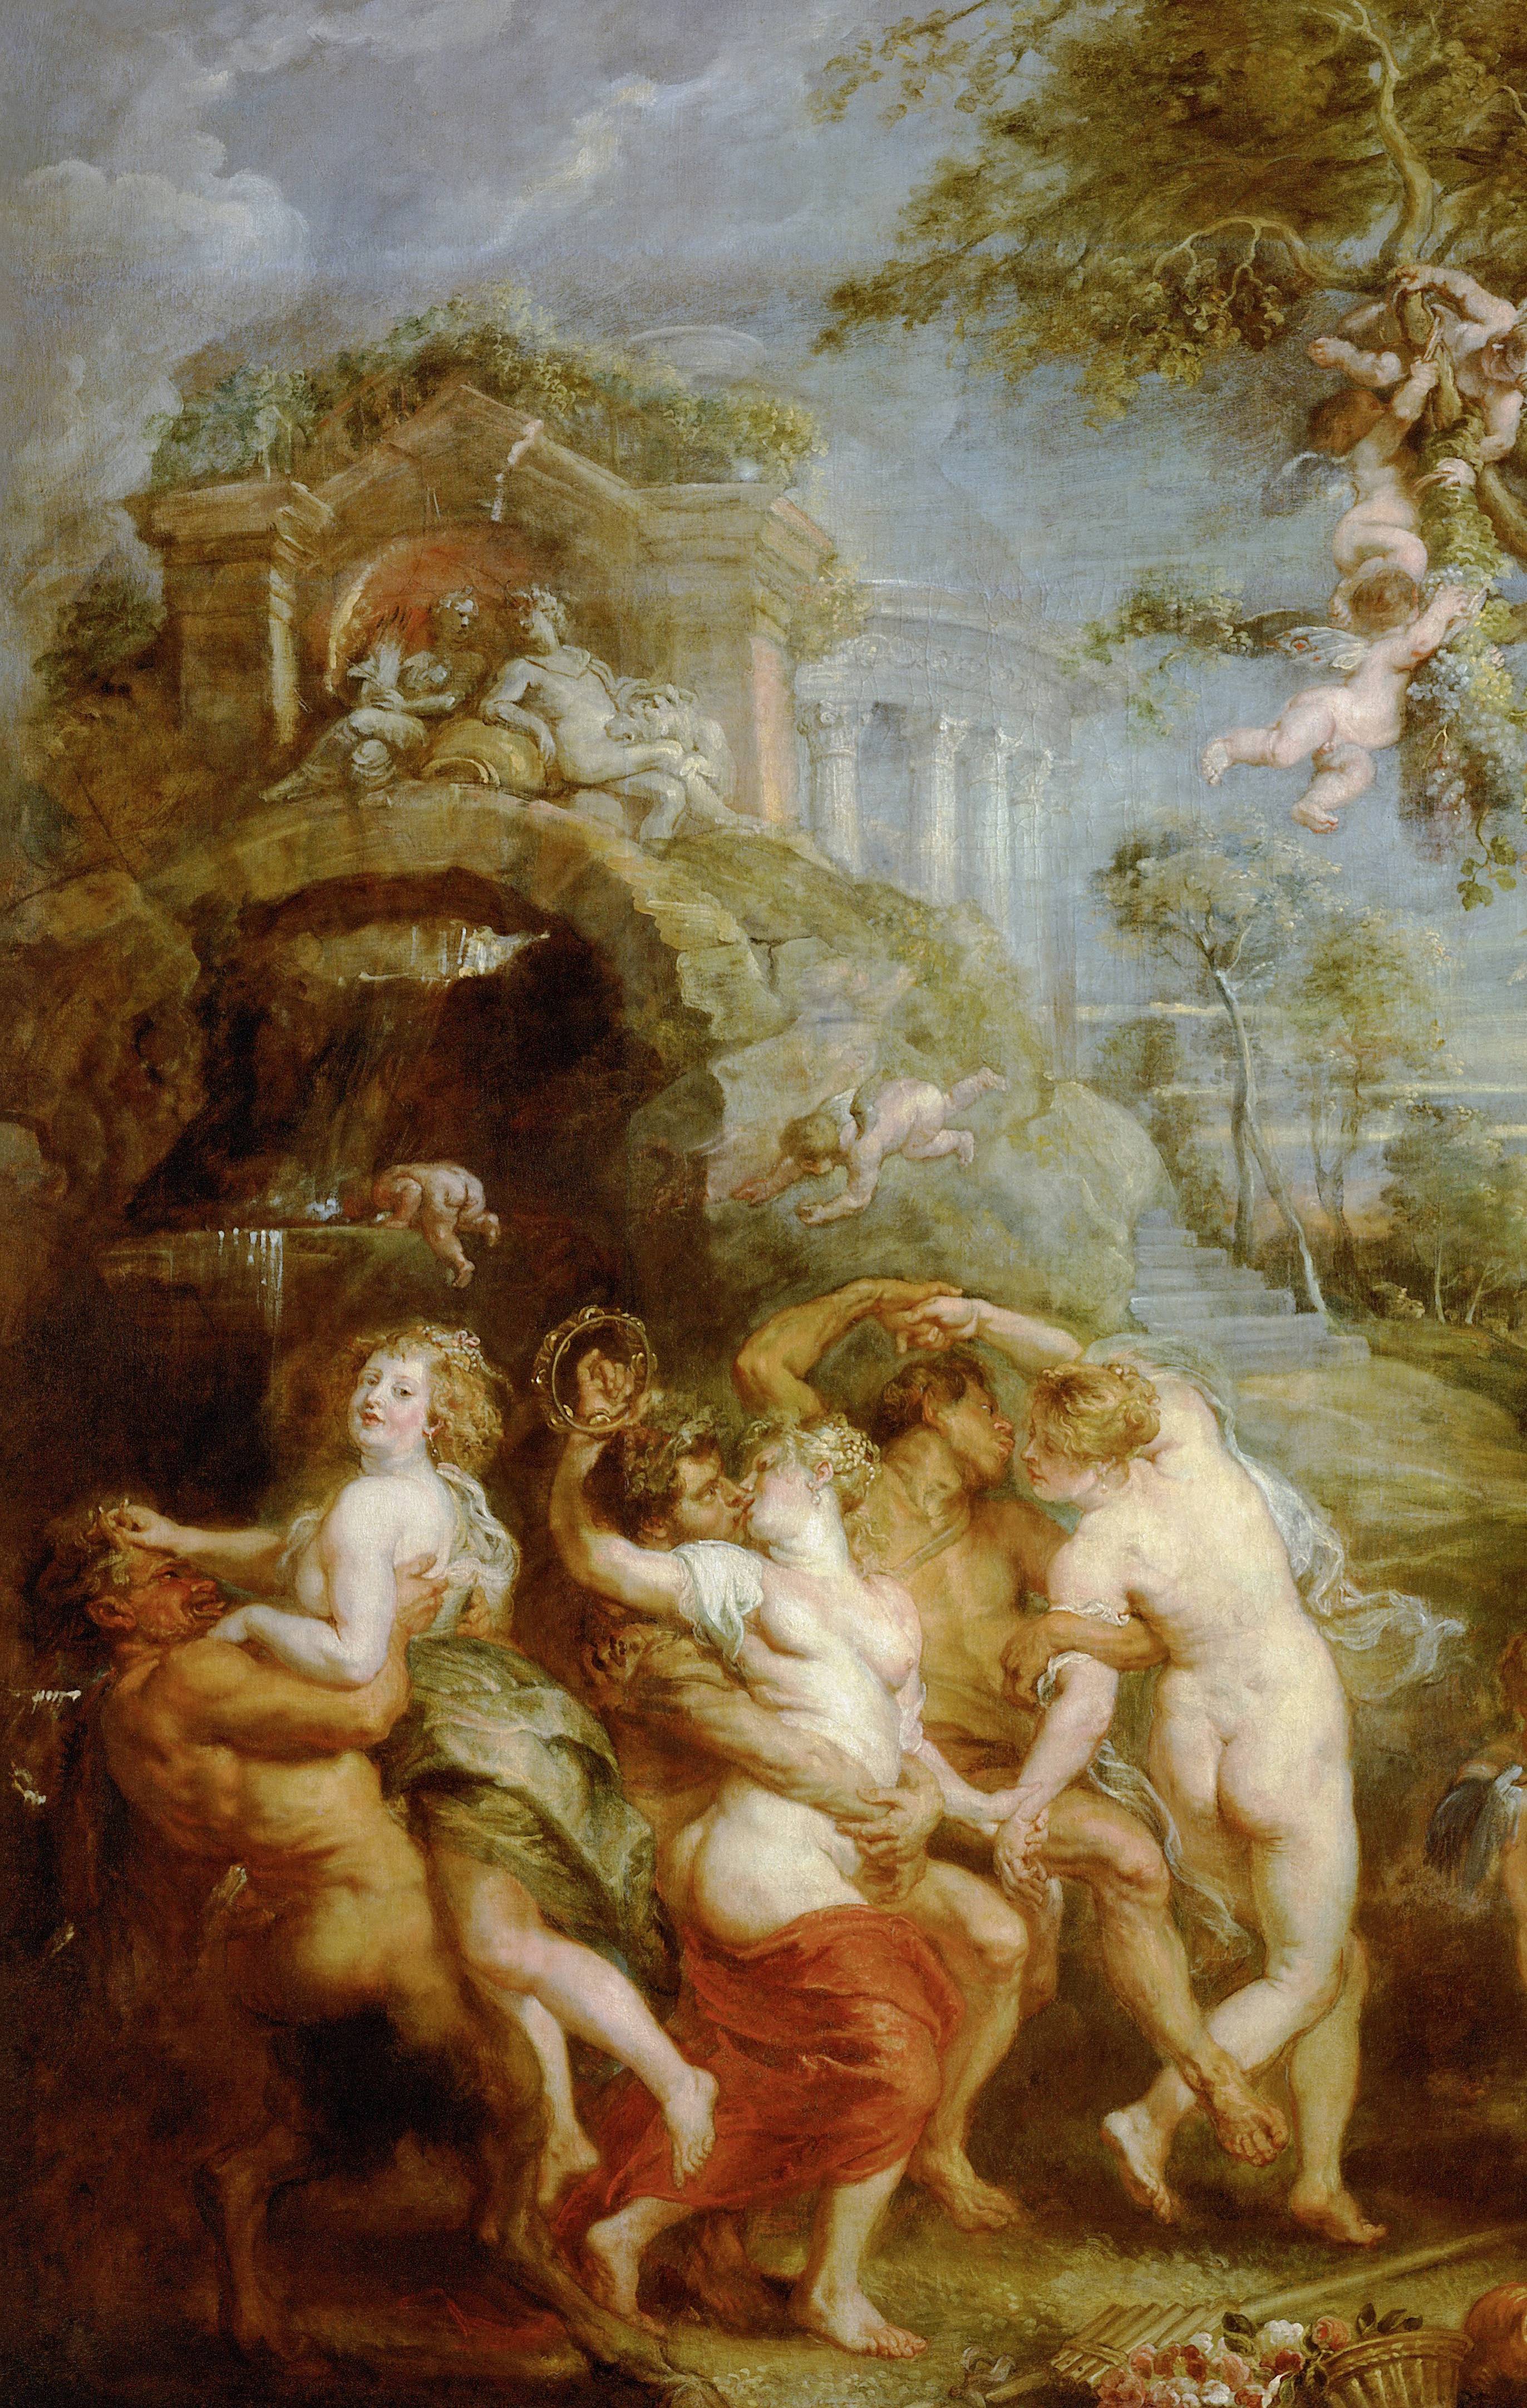 Peter Paul Rubens (1636 - 1637)